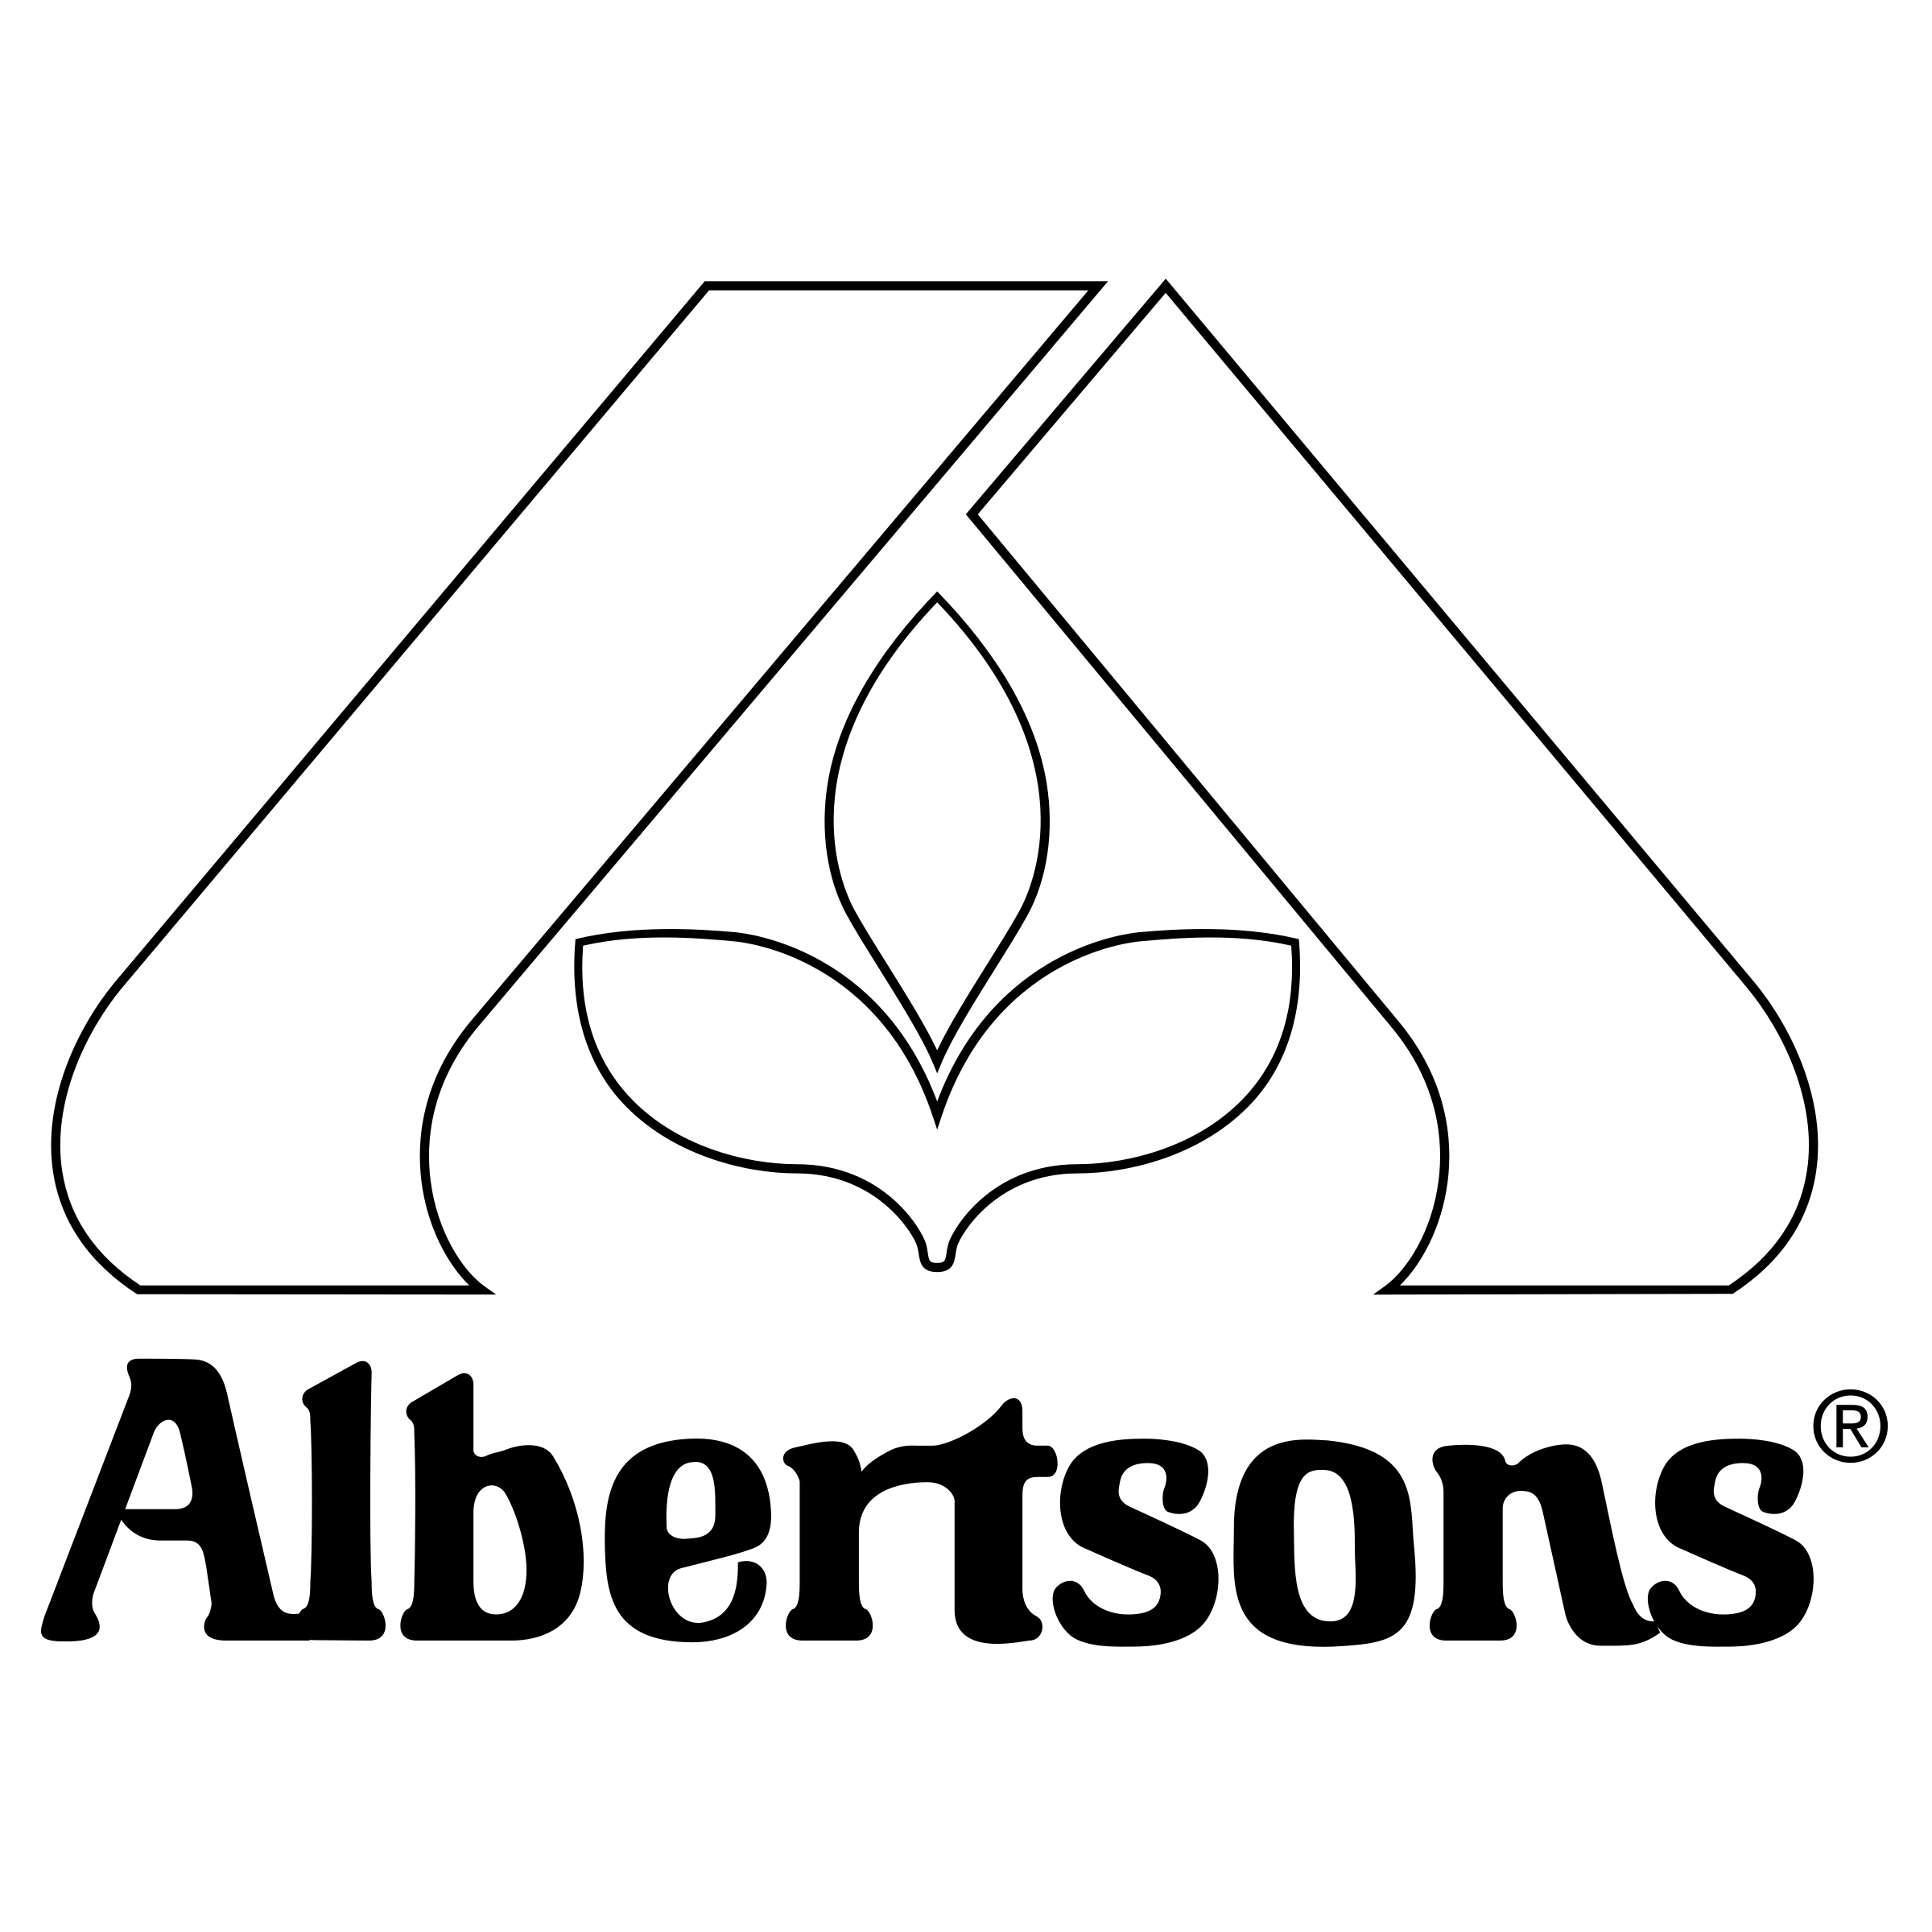 Albertsons Logo - Albertsons Logo PNG Transparent & SVG Vector - Freebie Supply